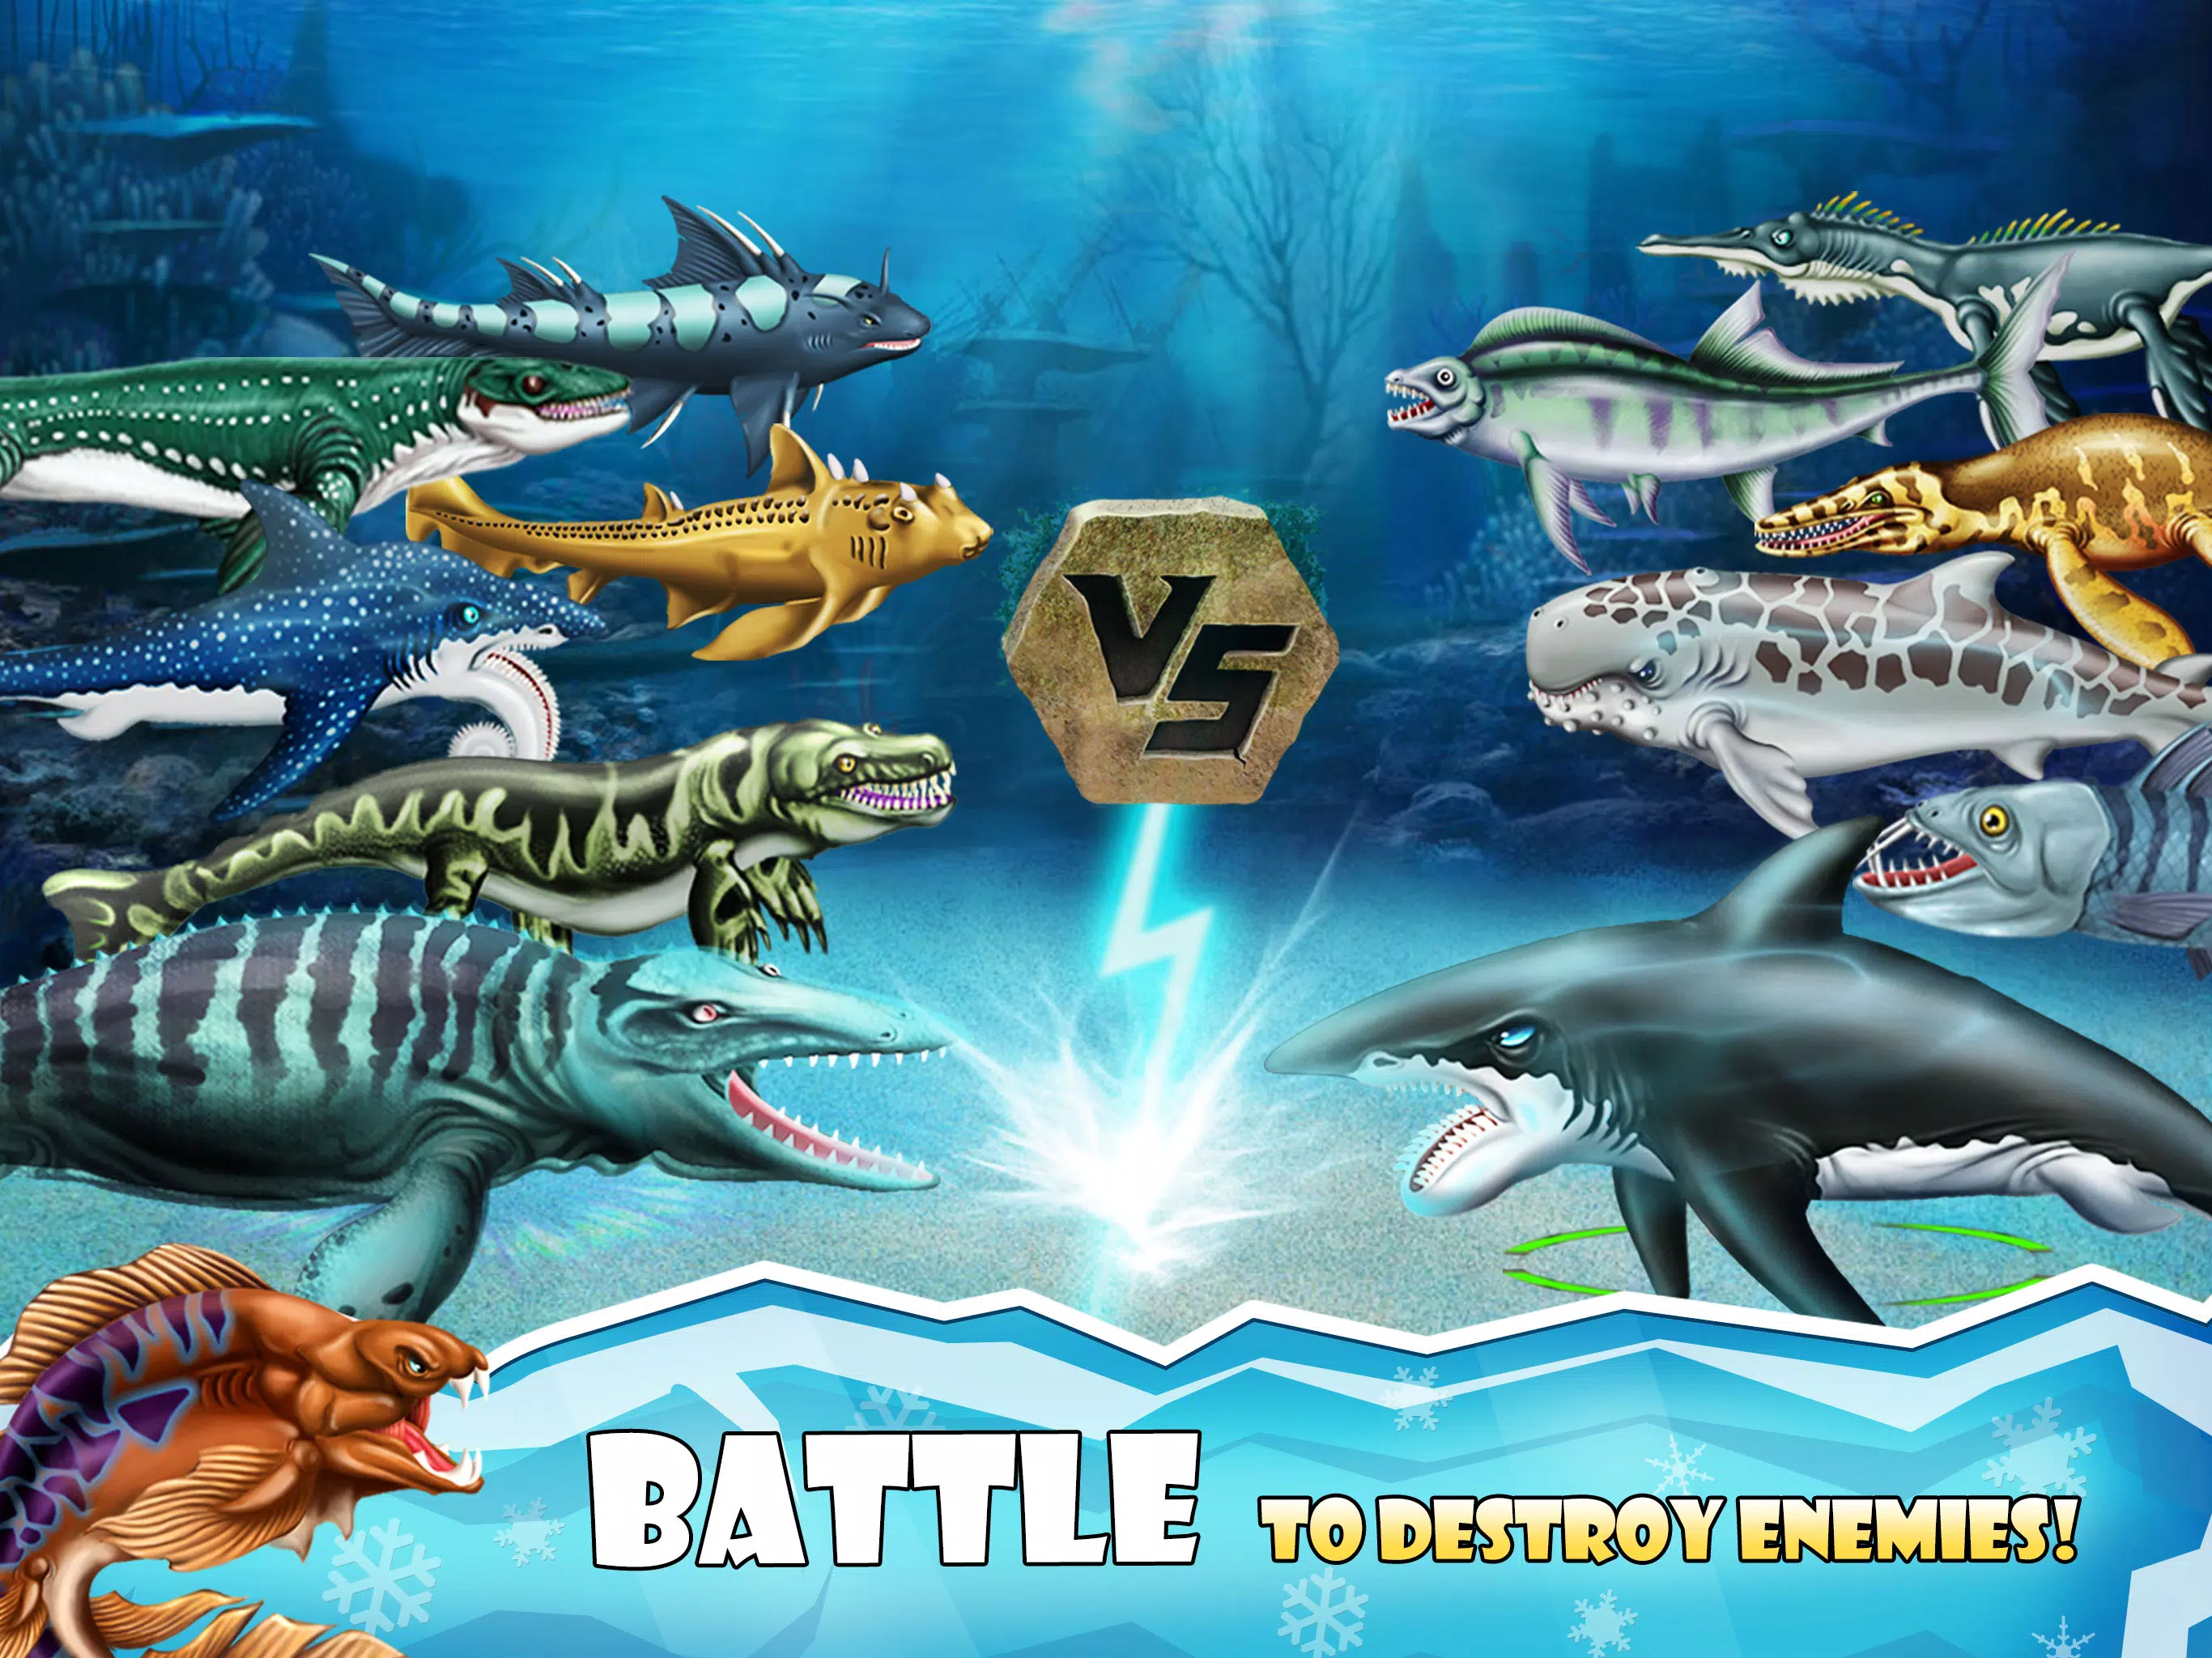 Dino Water World-Dinosaur game by Free Pixel Games Ltd